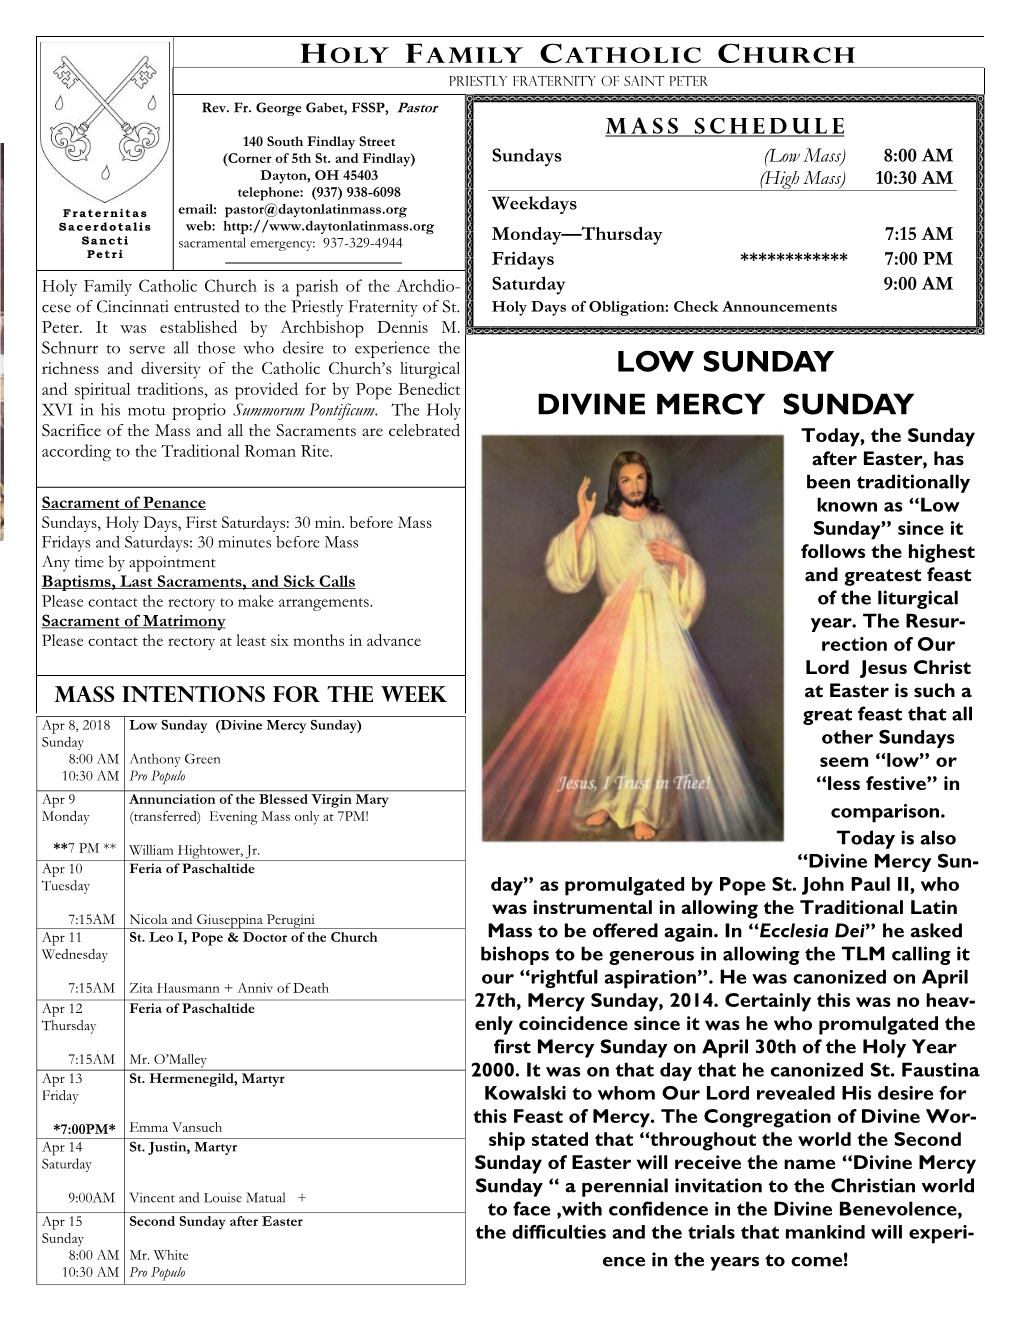 Low Sunday Divine Mercy Sunday